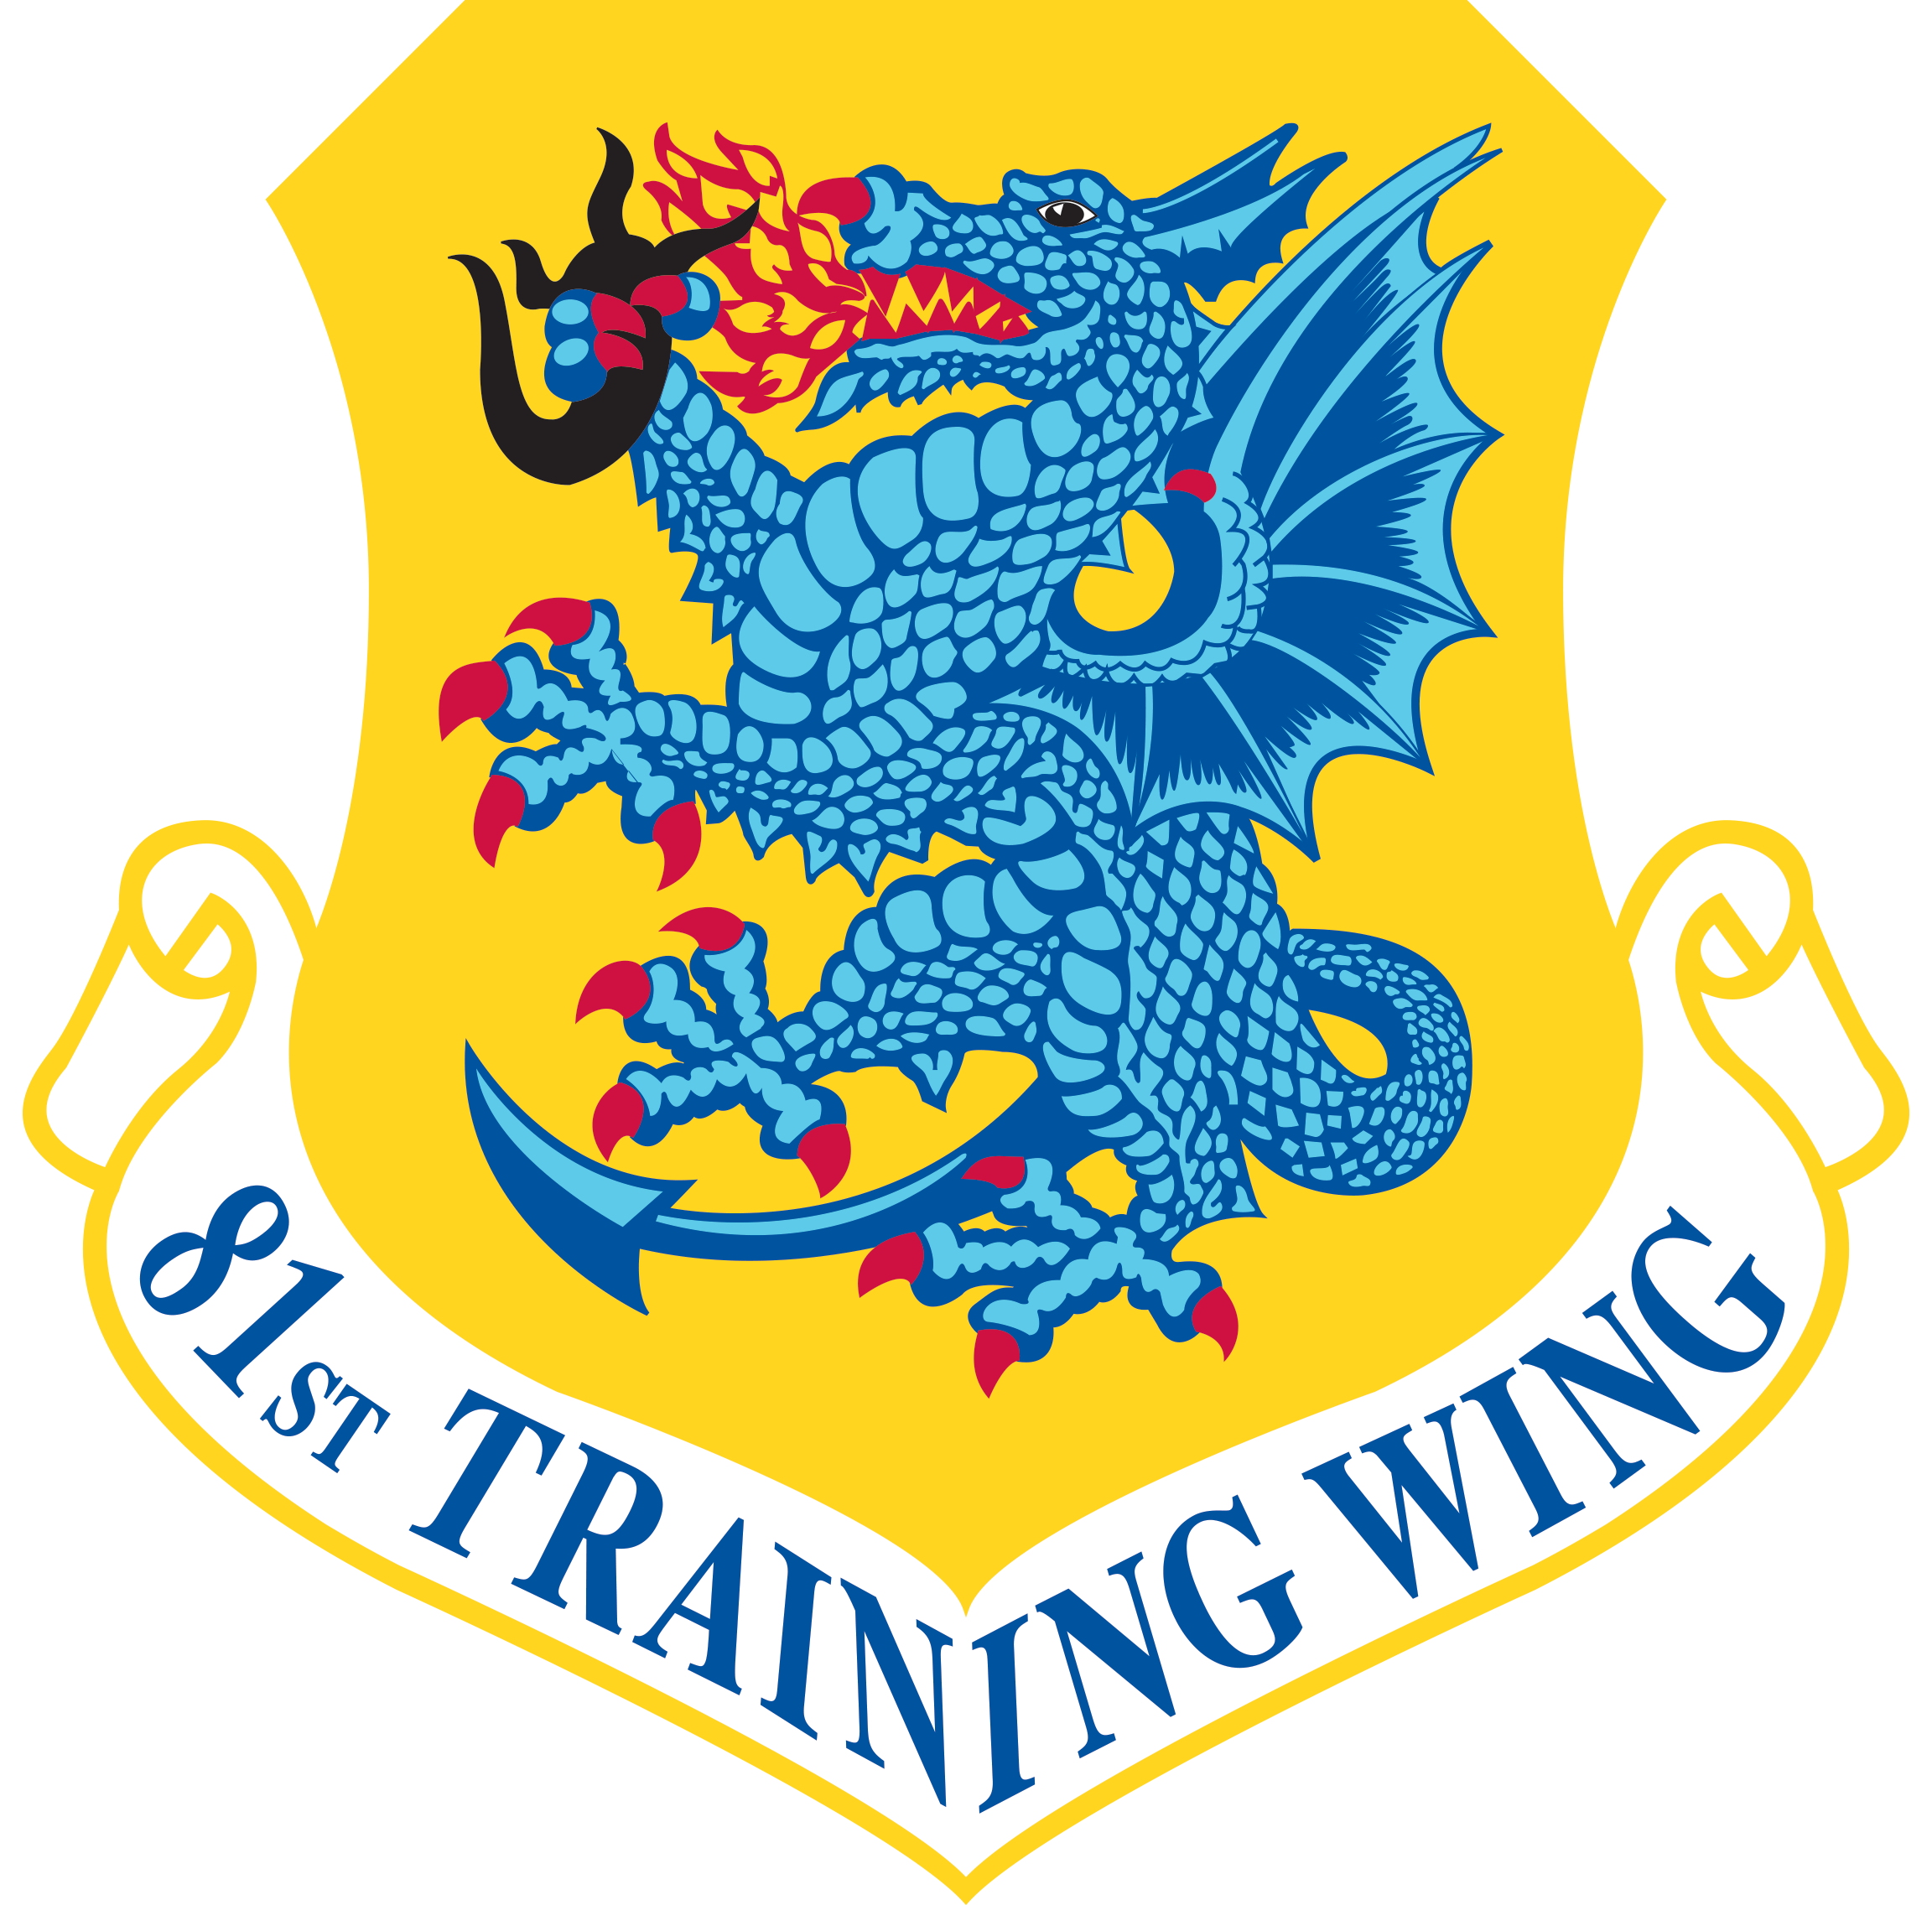 81st Training Wing logo